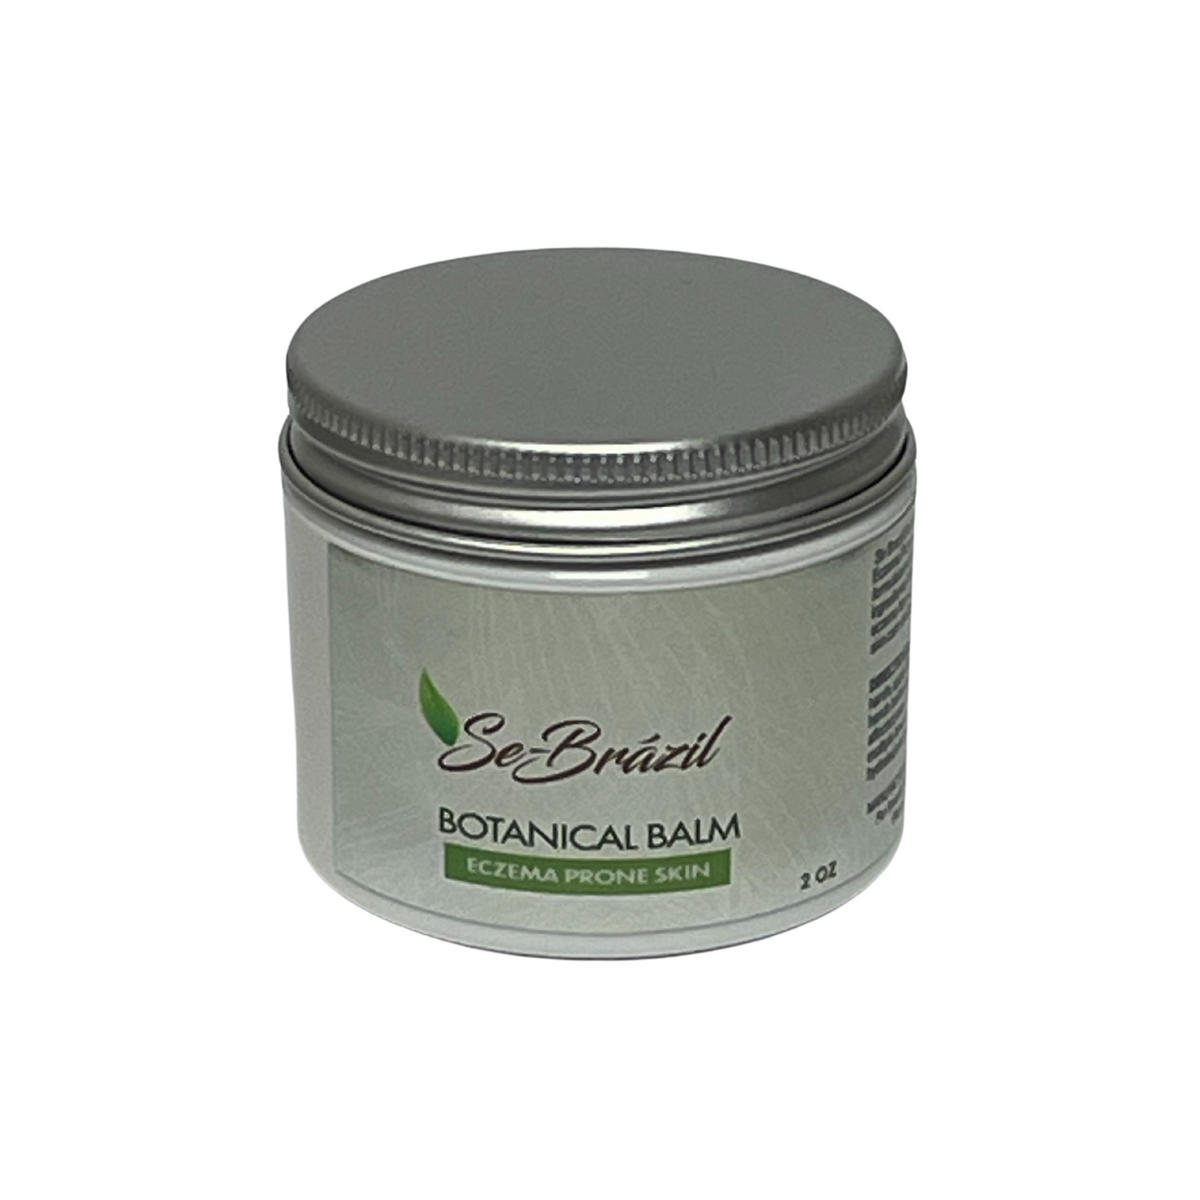 Se-Brazil Botanical Balm for Eczema Prone Skin